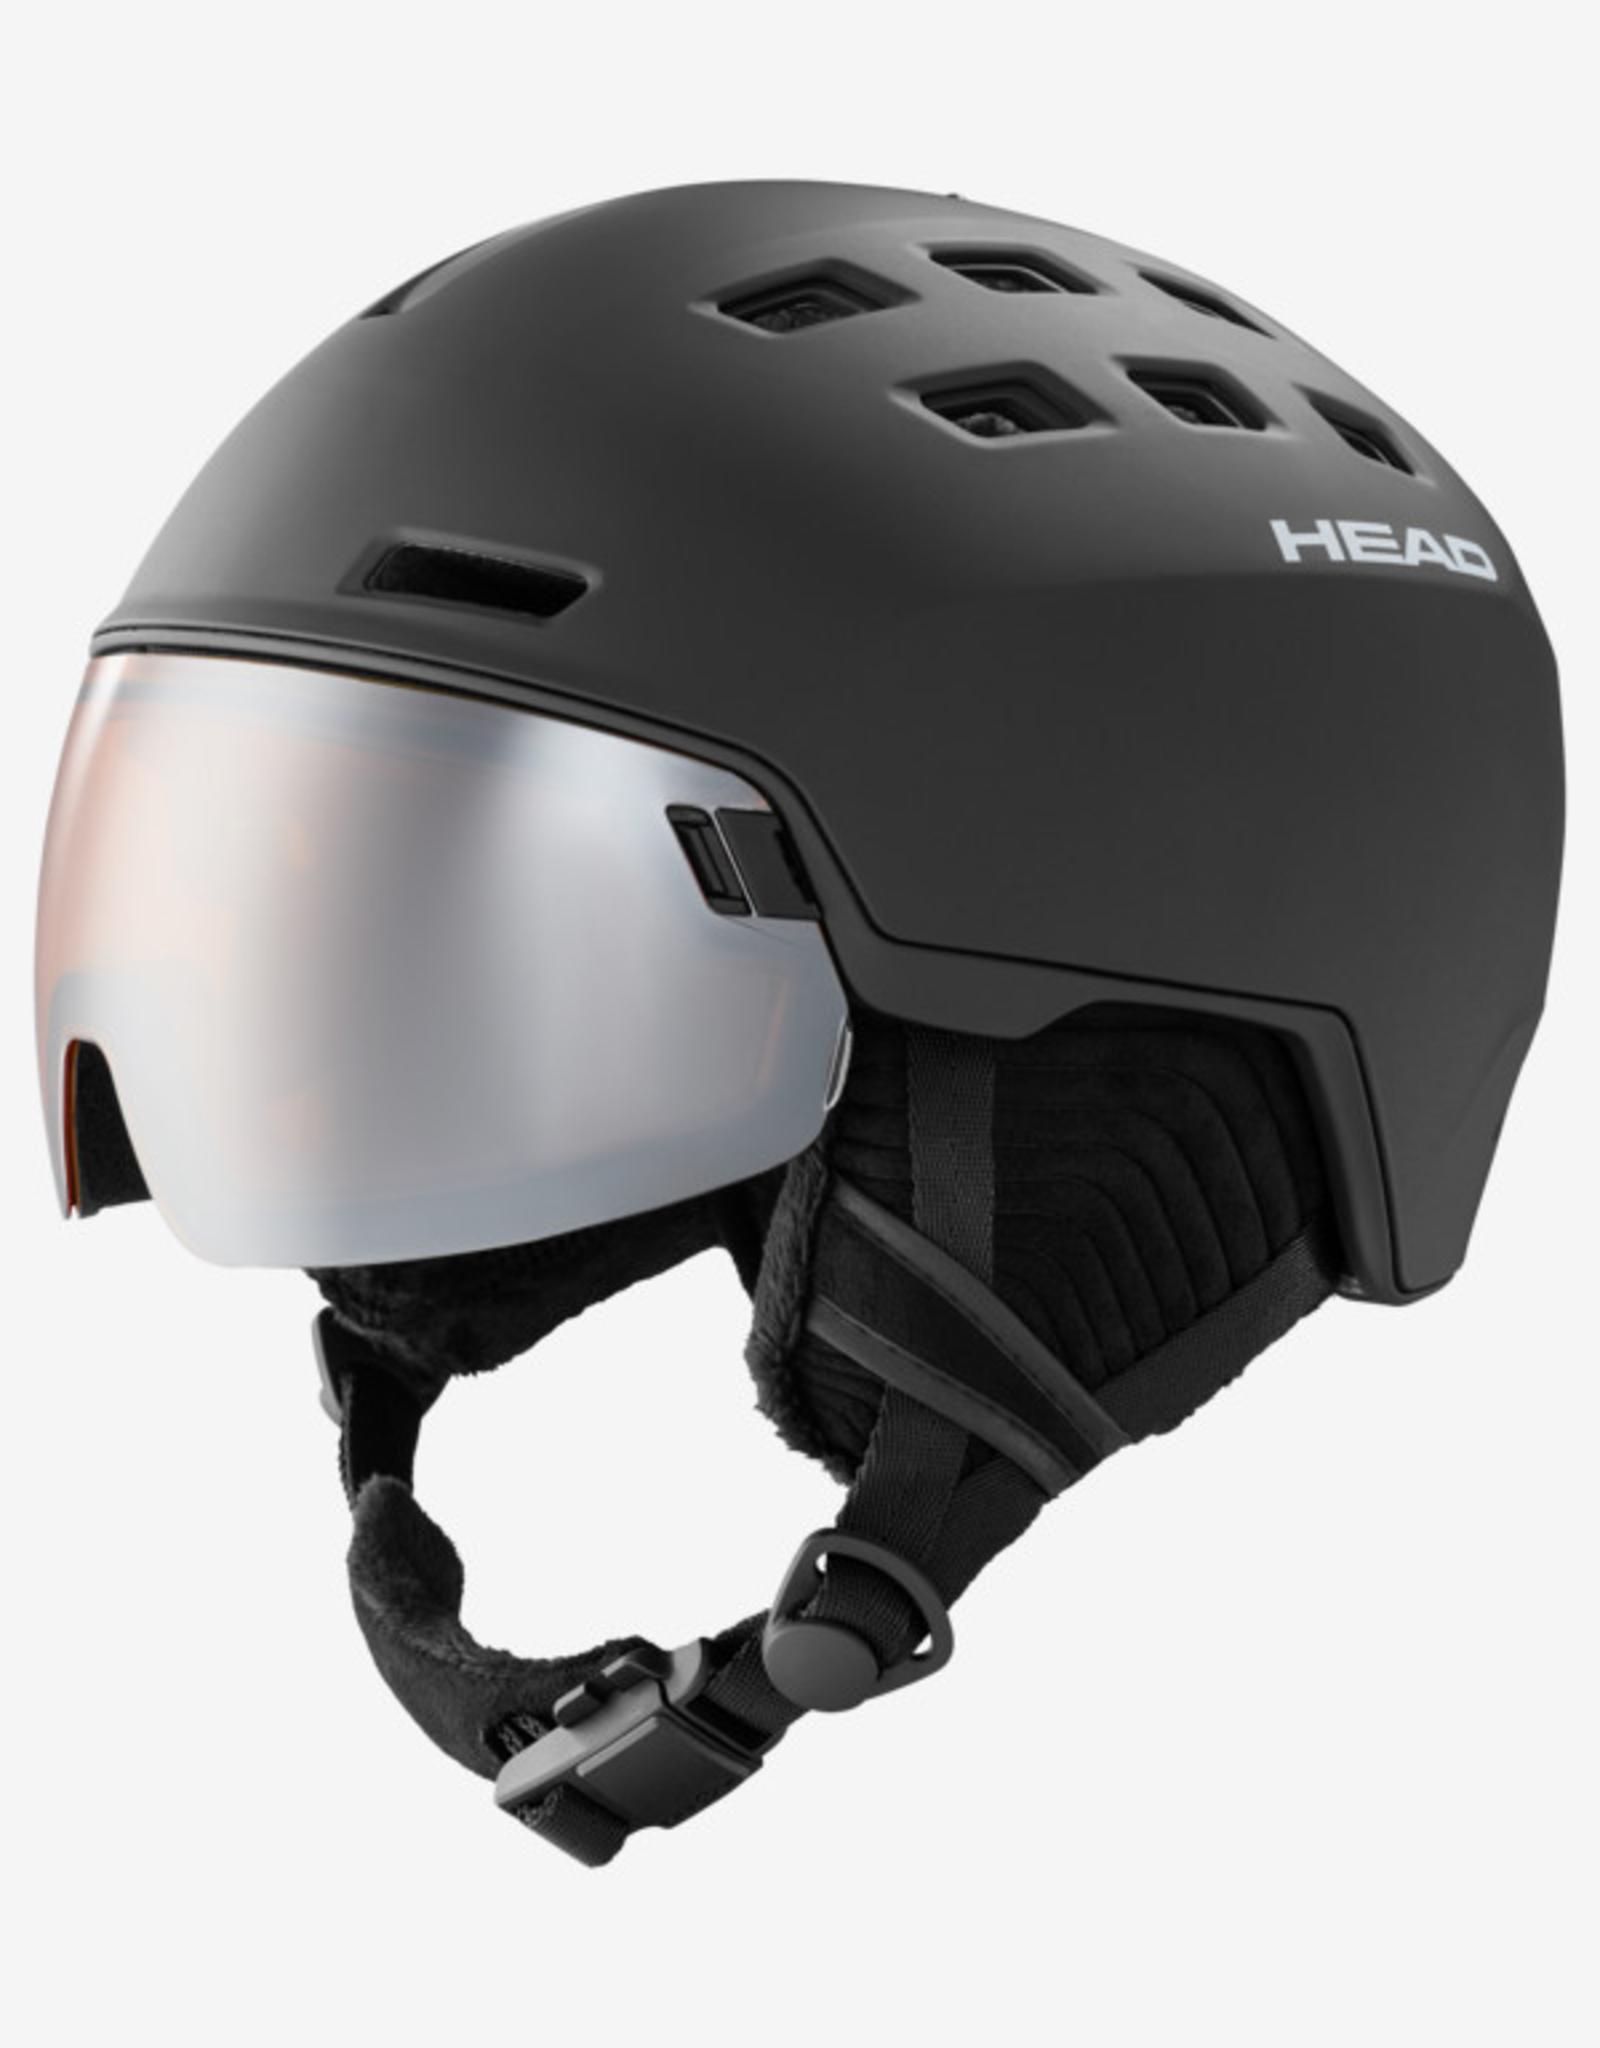 Head Head - RADAR VISOR Helmet - Black -